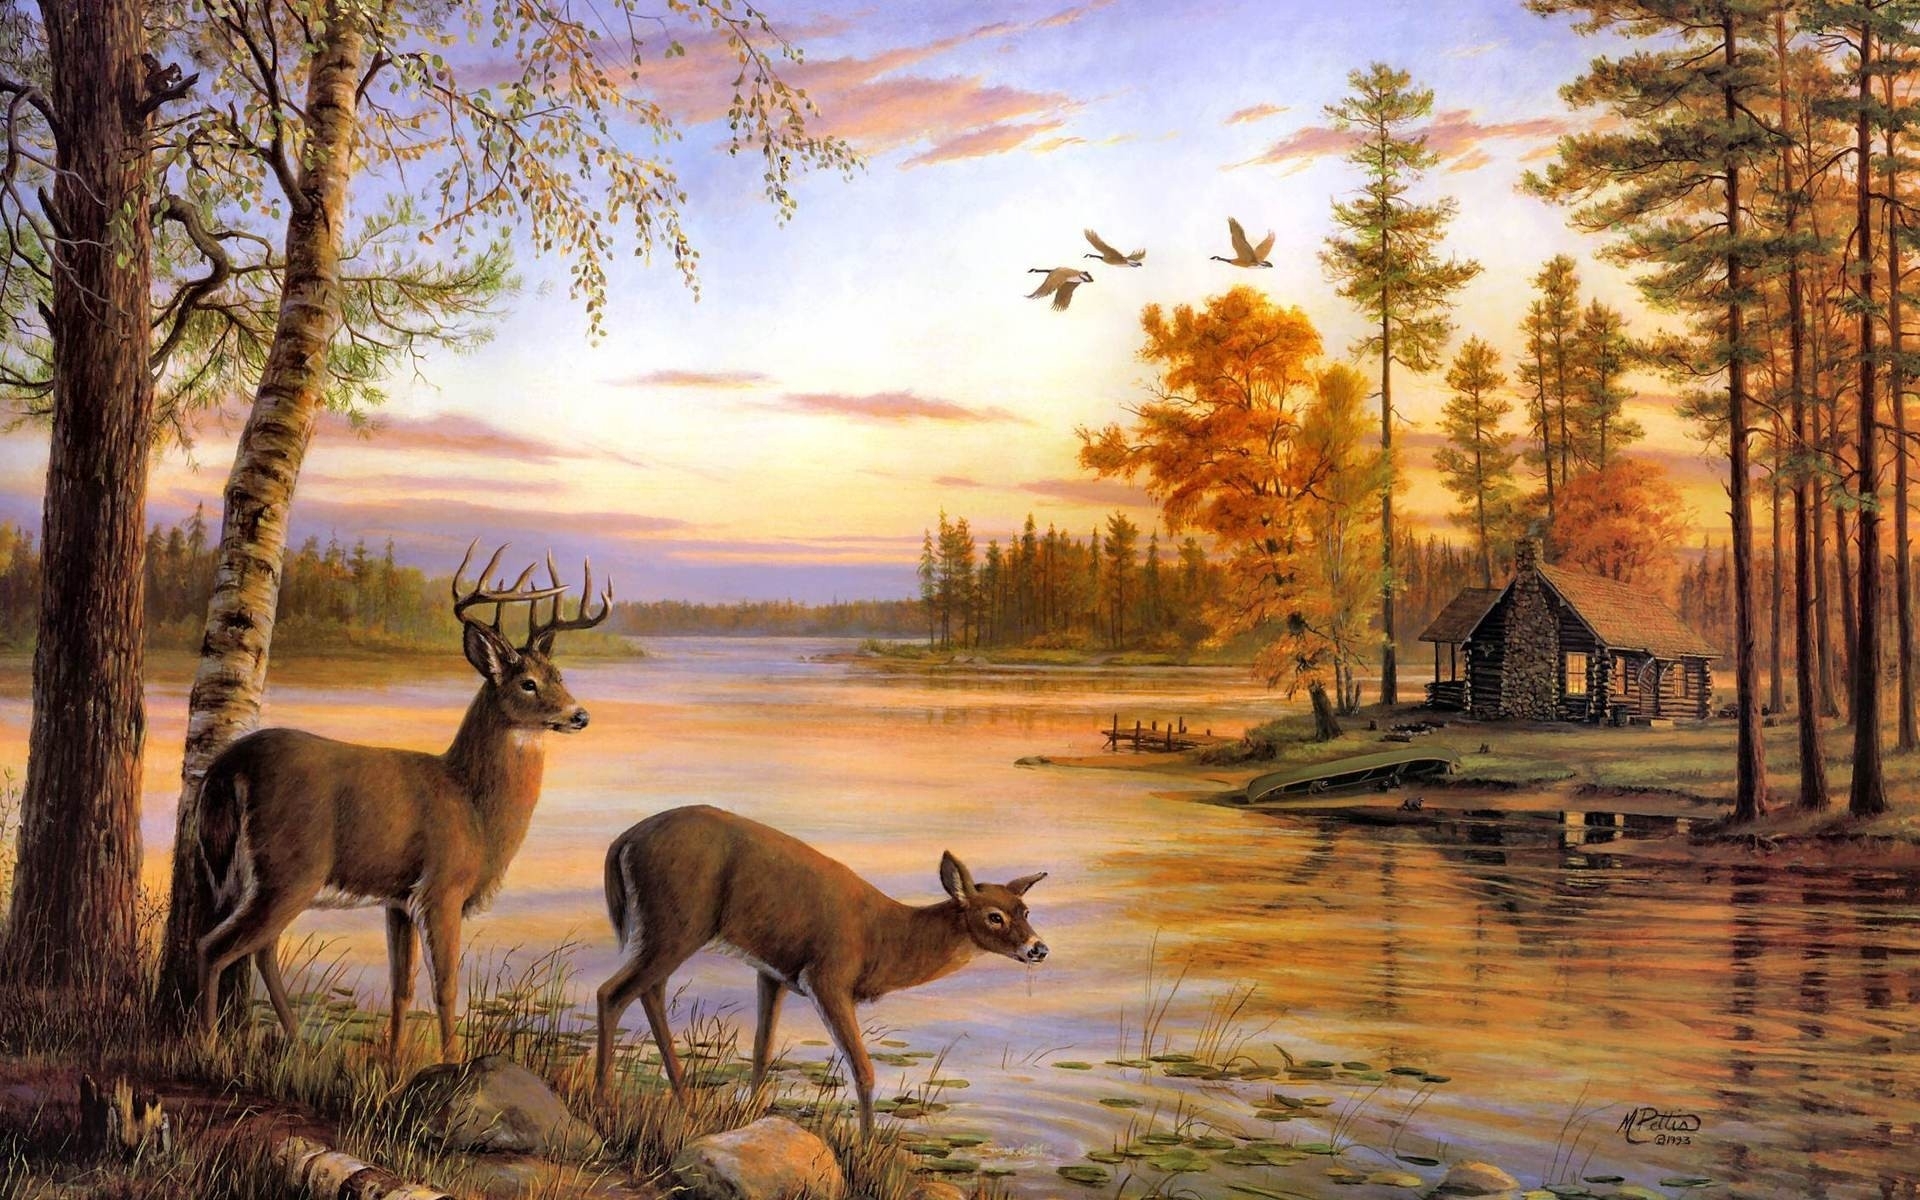  deer artwork cabin lakes 1920x1200 wallpaper High Resolution Wallpaper 1920x1200